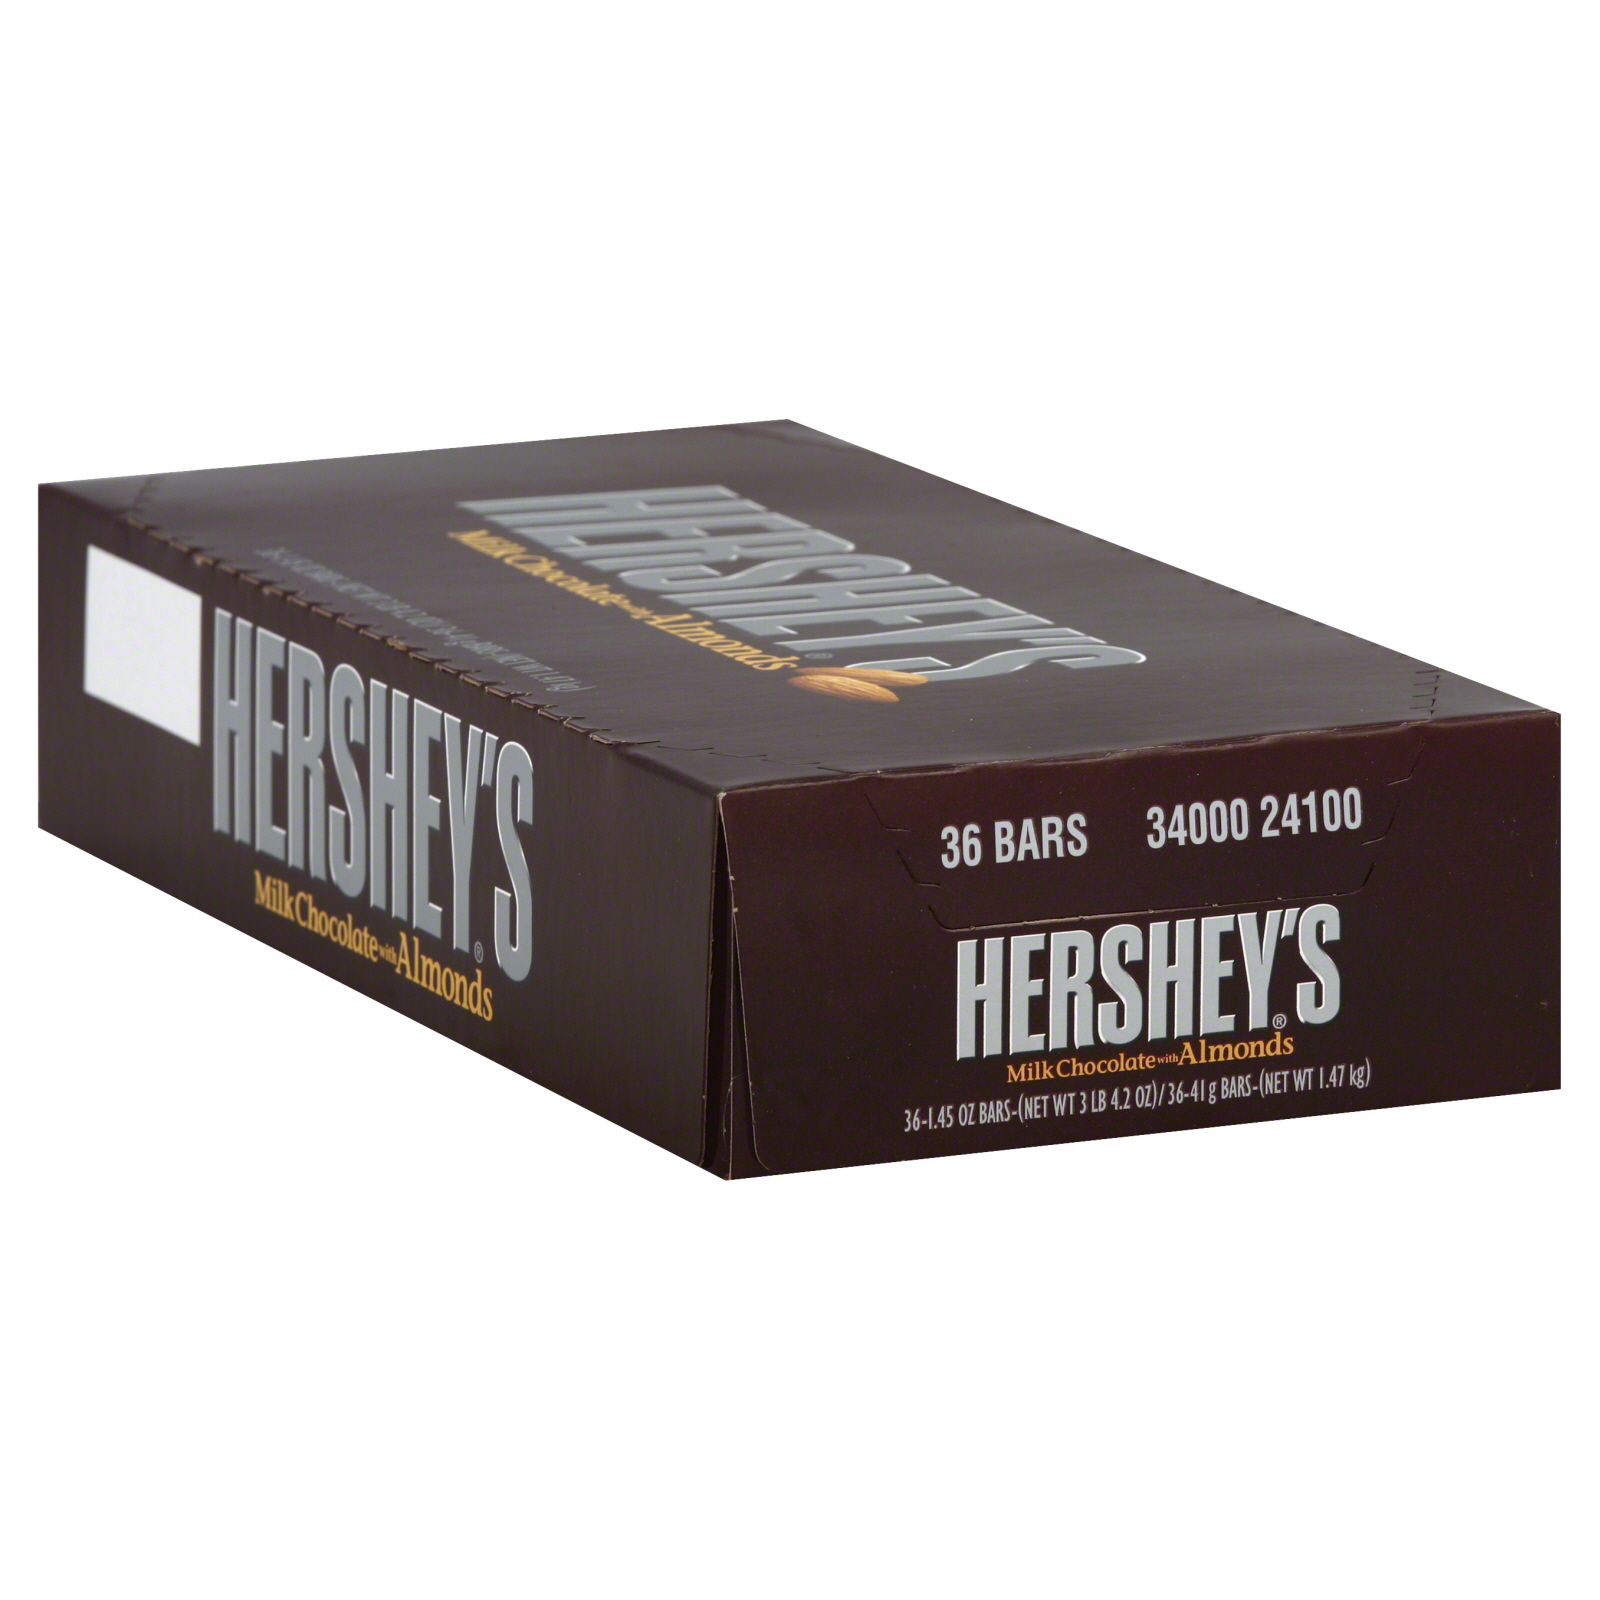 Hershey's Milk Chocolate with Almonds, 36 - 1.45 oz (41 g) bars